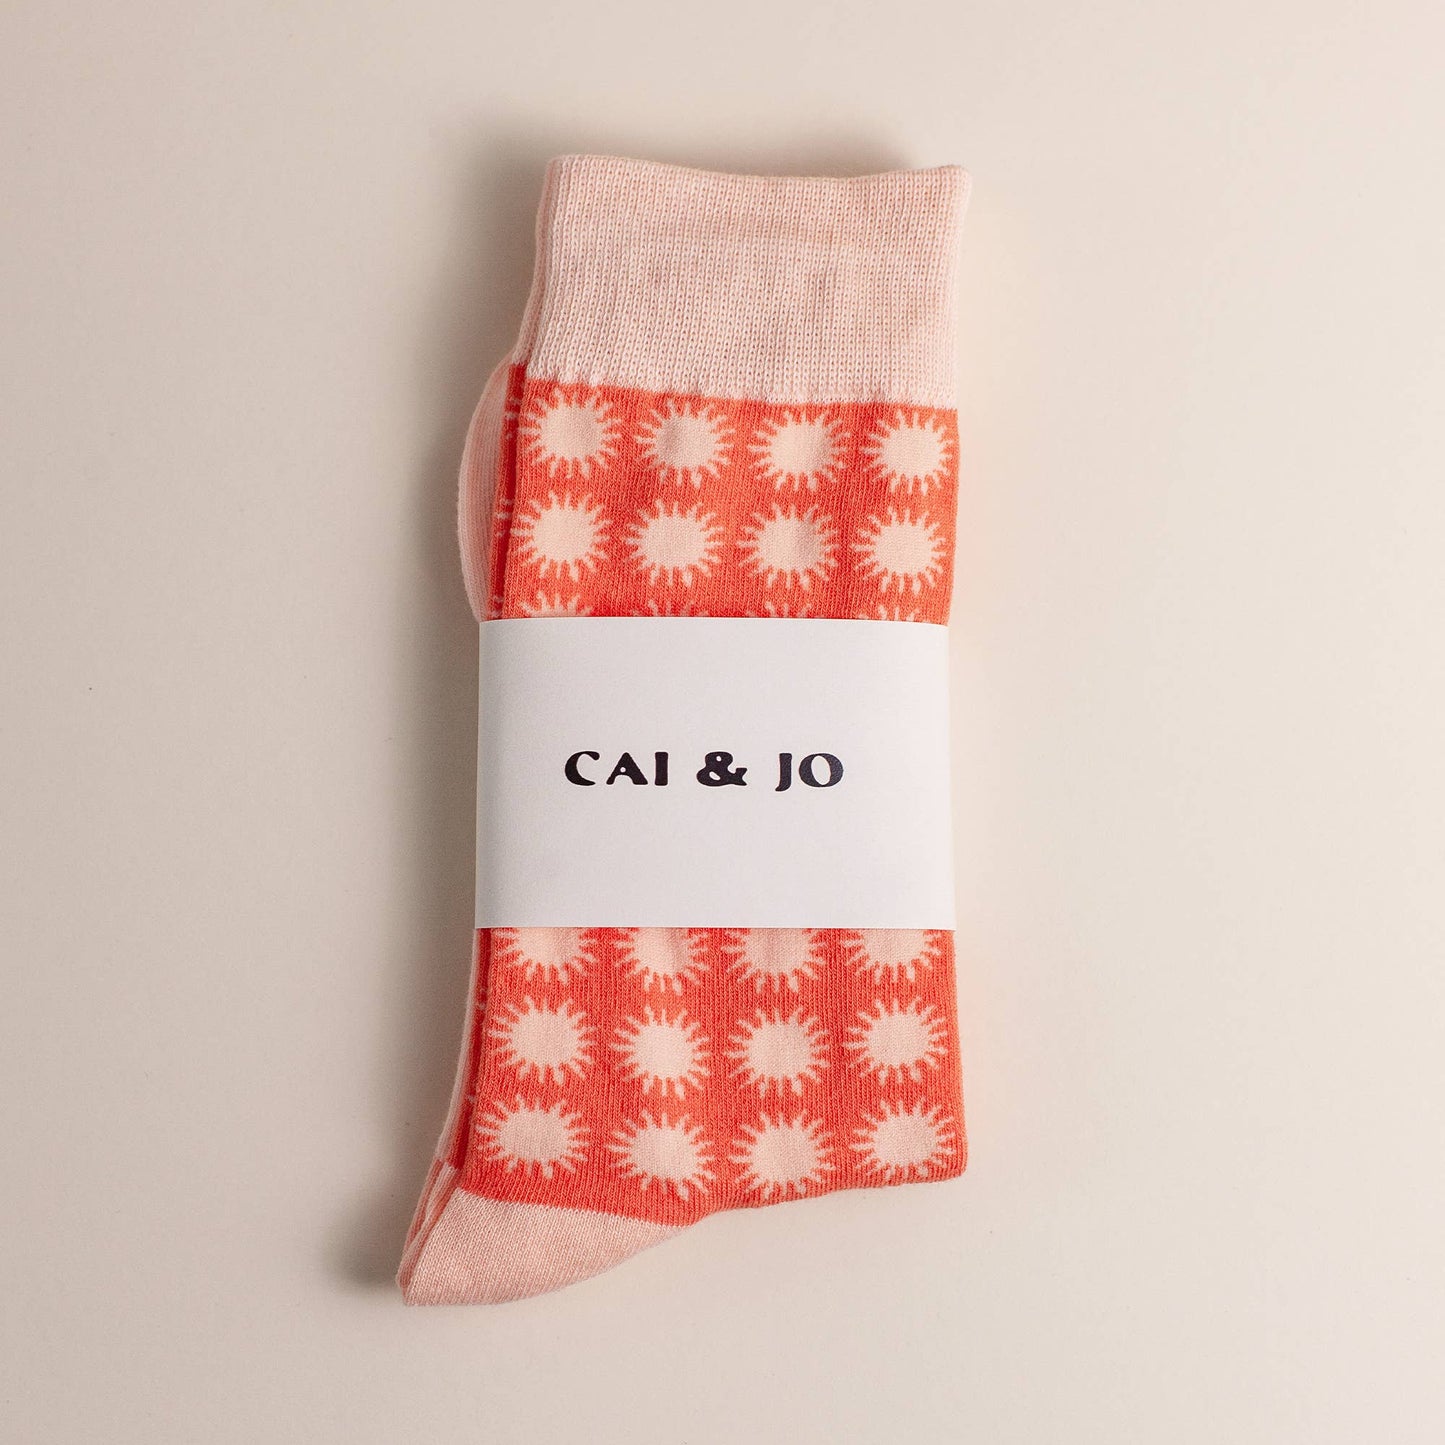 Cai & Jo Sunshine socks